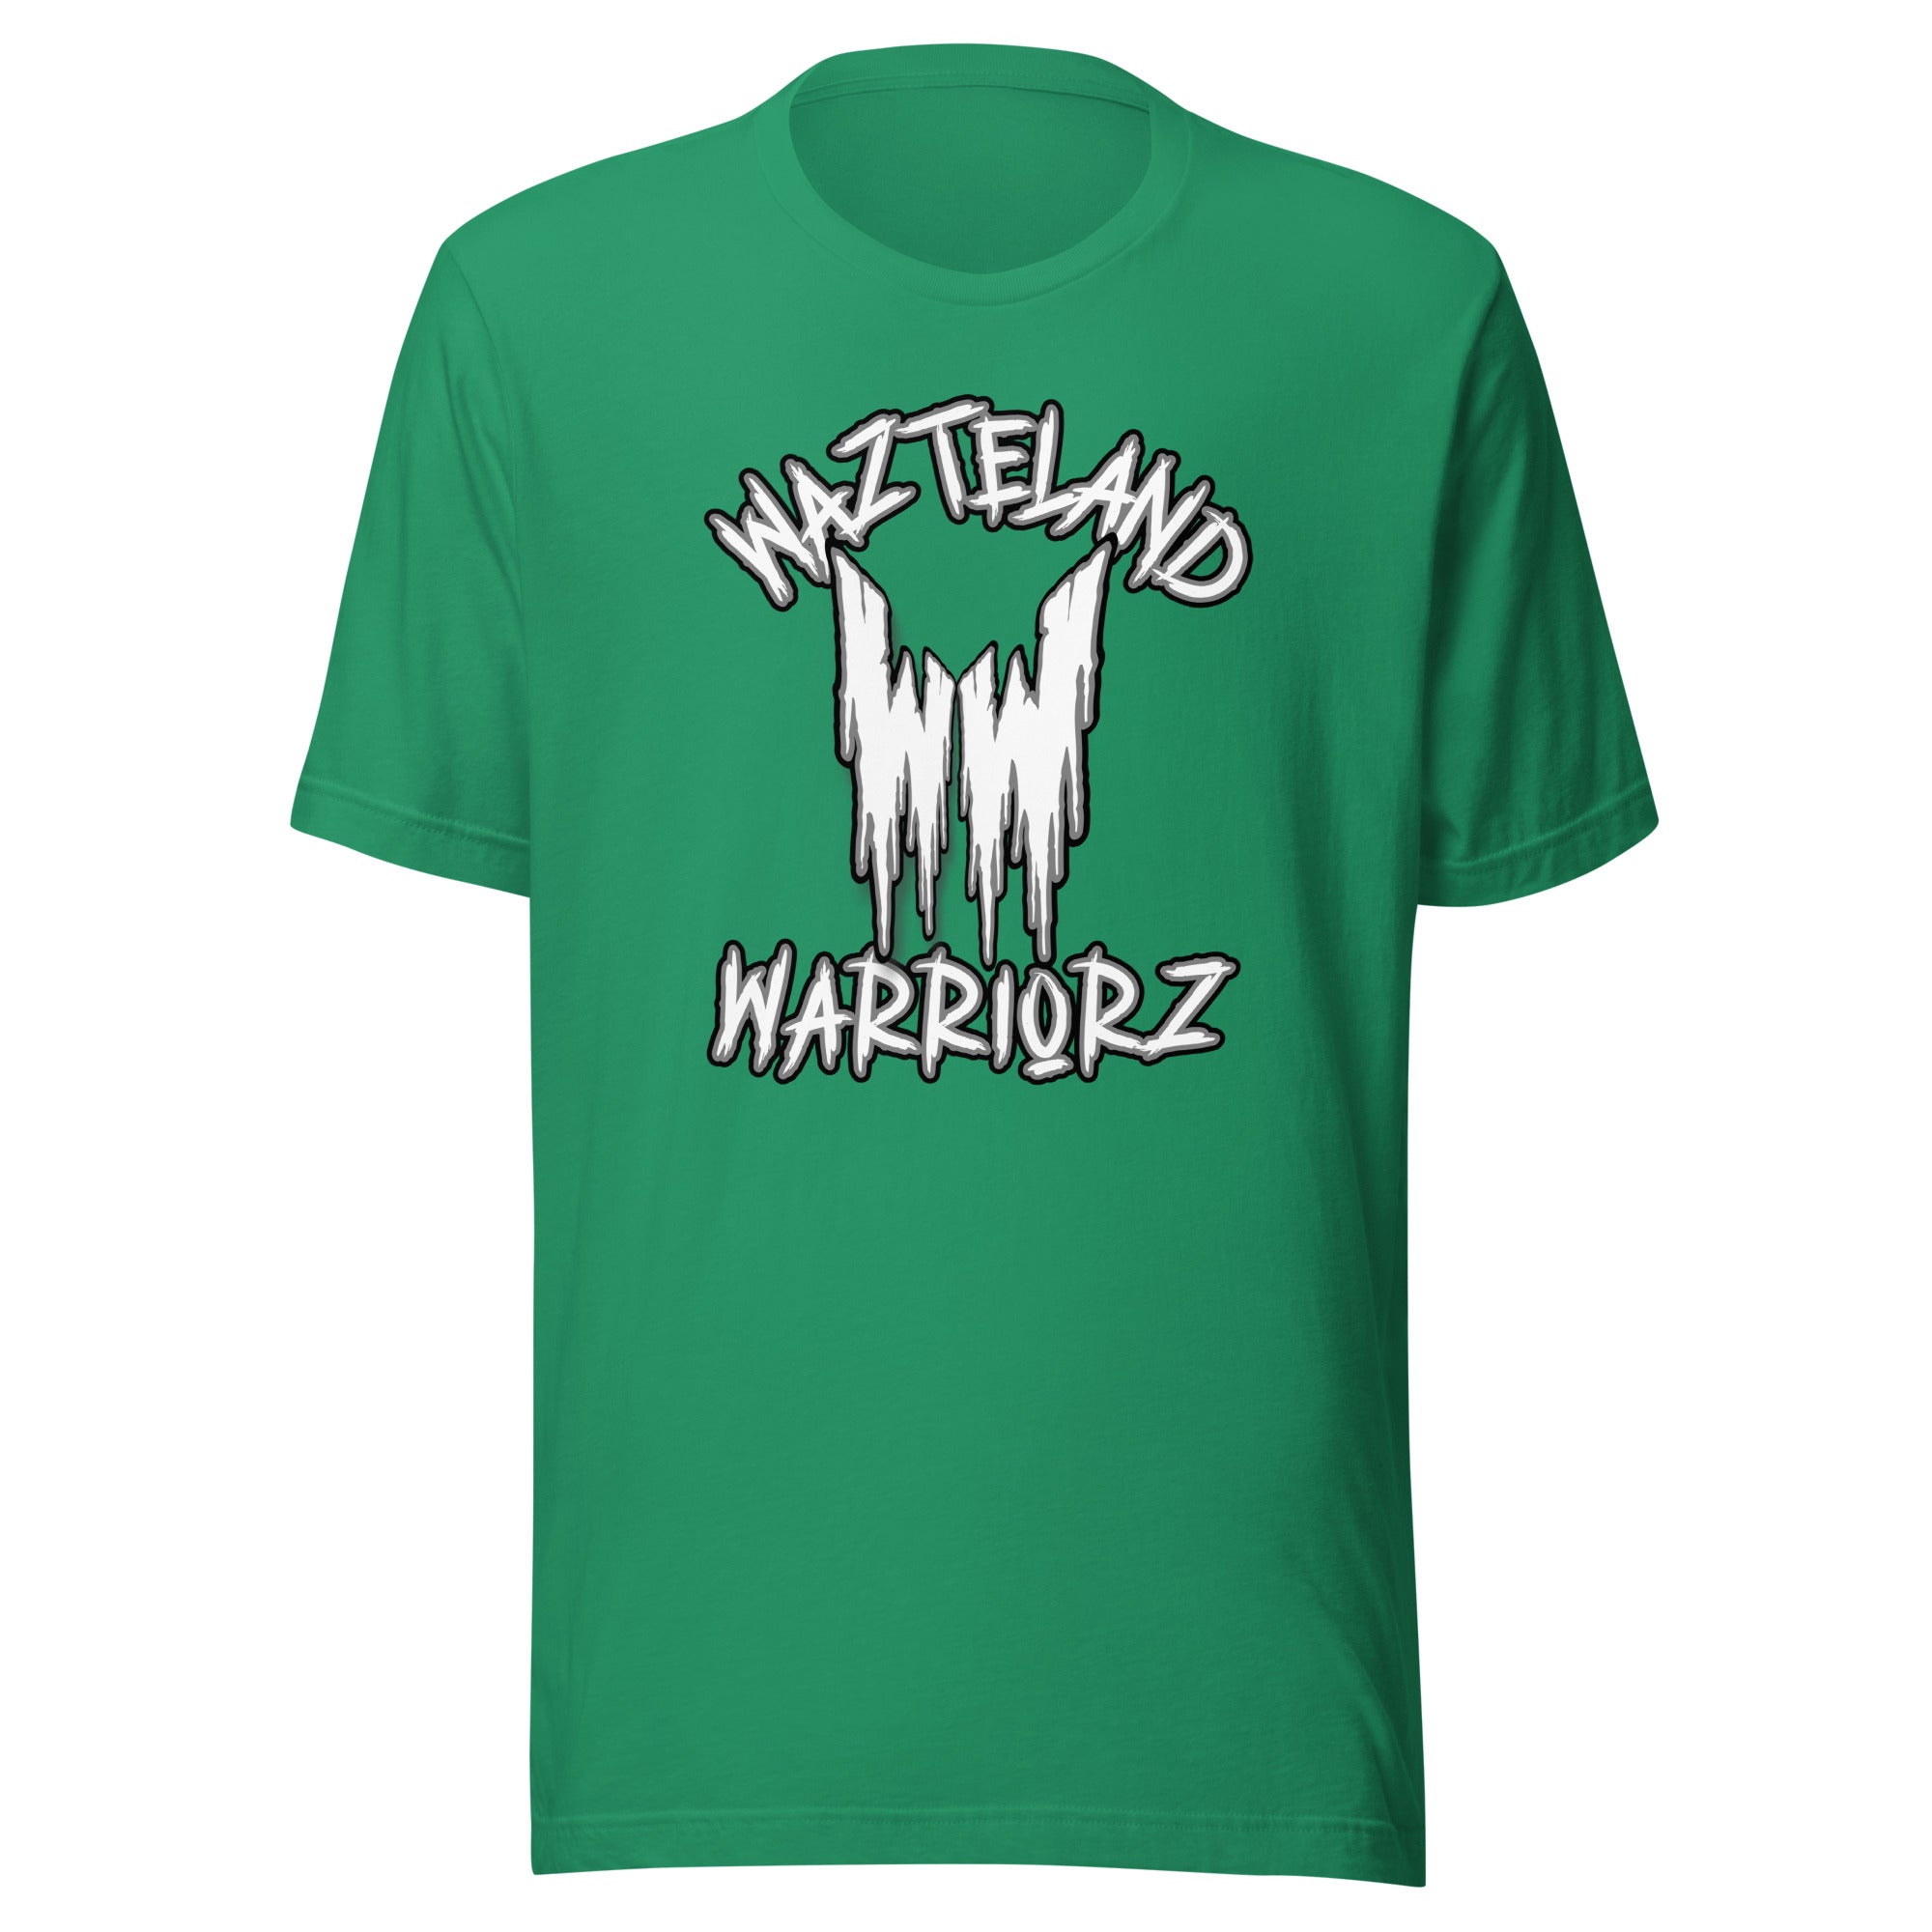 Wazteland Warriorz - Unisex t-shirt